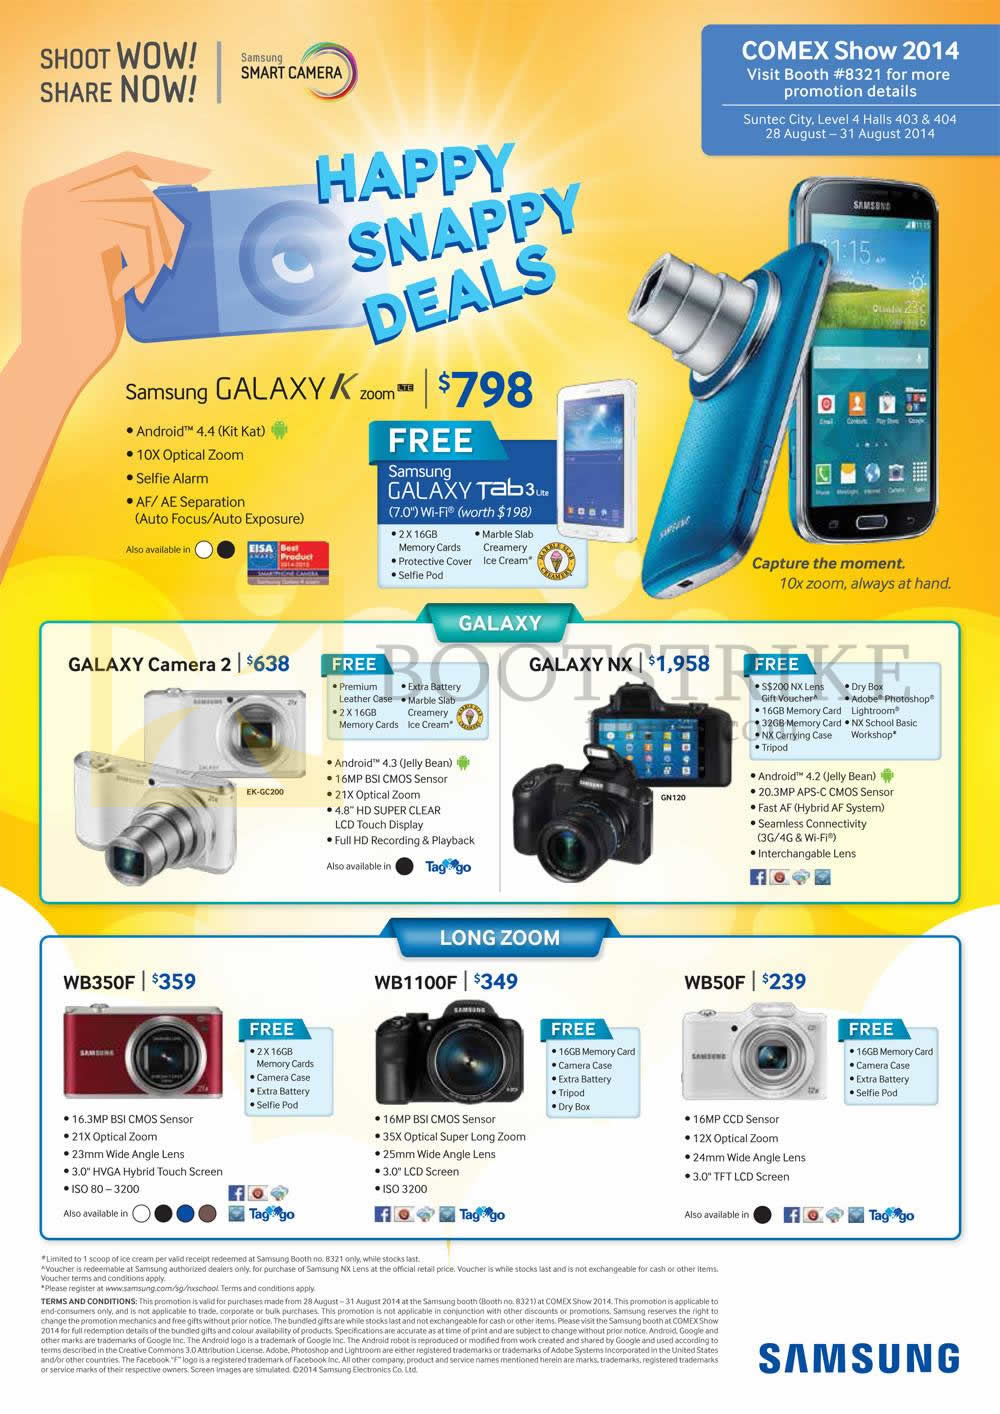 COMEX 2014 price list image brochure of Samsung Smartphones Digital Cameras Galaxy K Zoom, Galaxy Camera 2, Galaxy NX, WB350F, WB1100F, WB50F